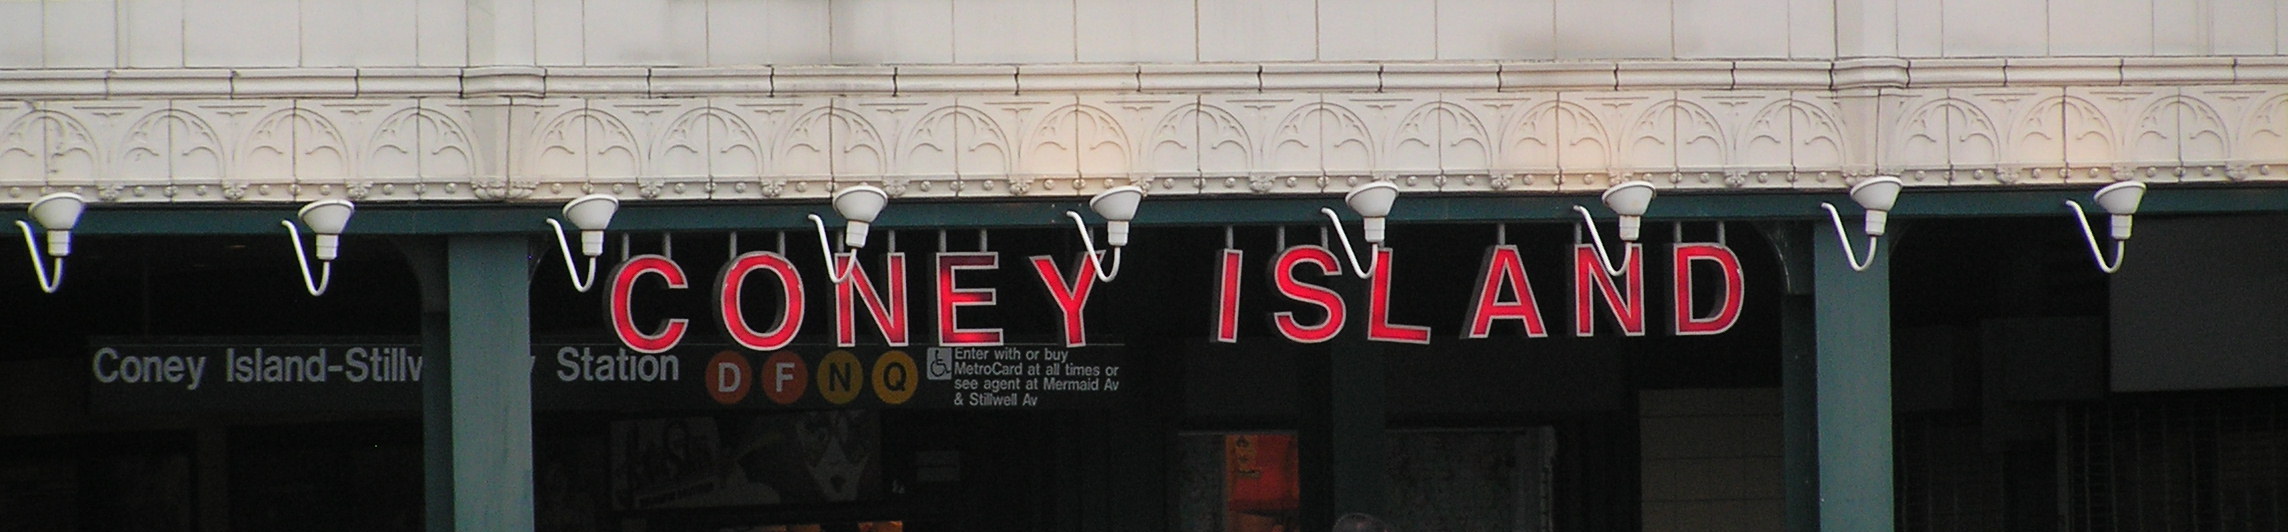 coney island sign brooklyn new york city usa